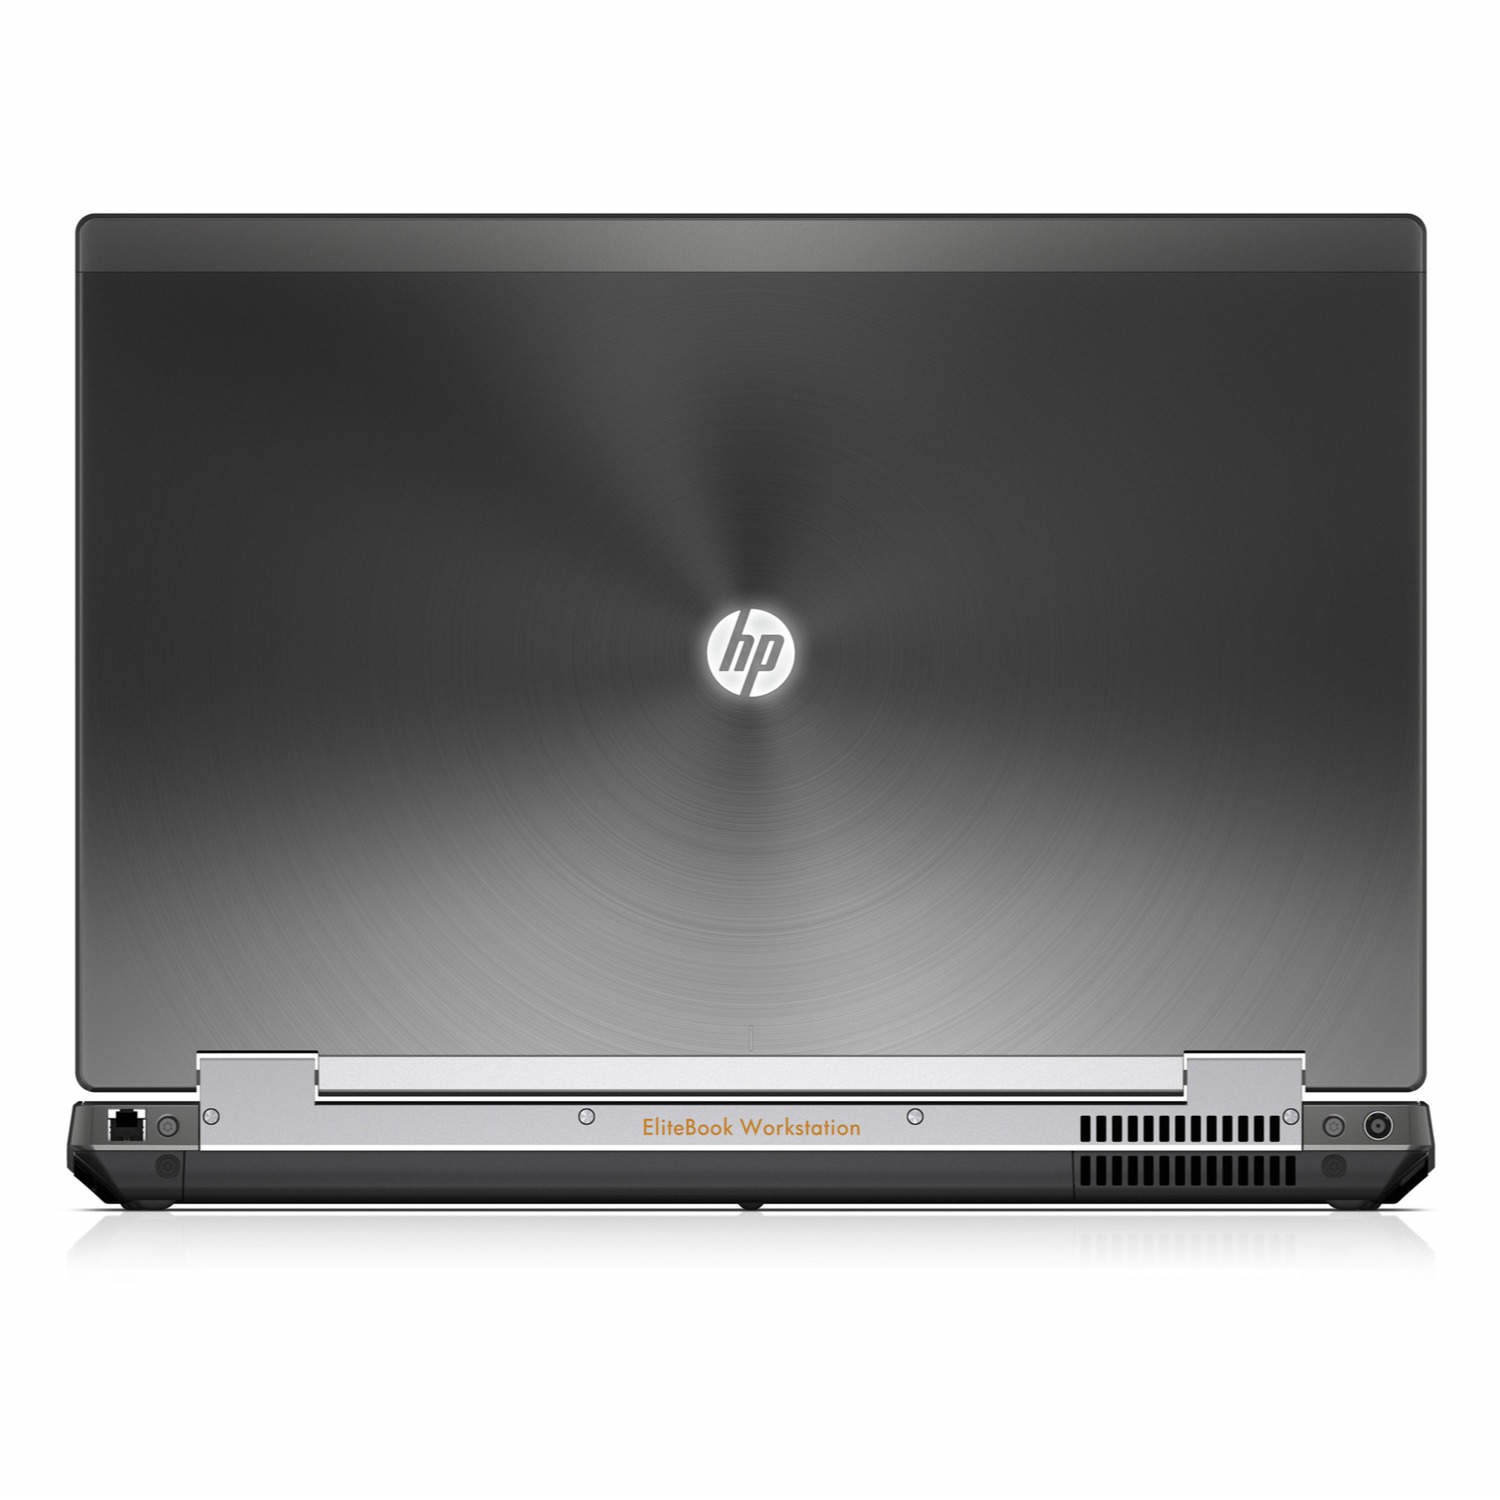 HP EliteBook Mobile Workstation 8770w Core i7 4GB 500GB 17.3 inch Windows 7  Pro Laptop